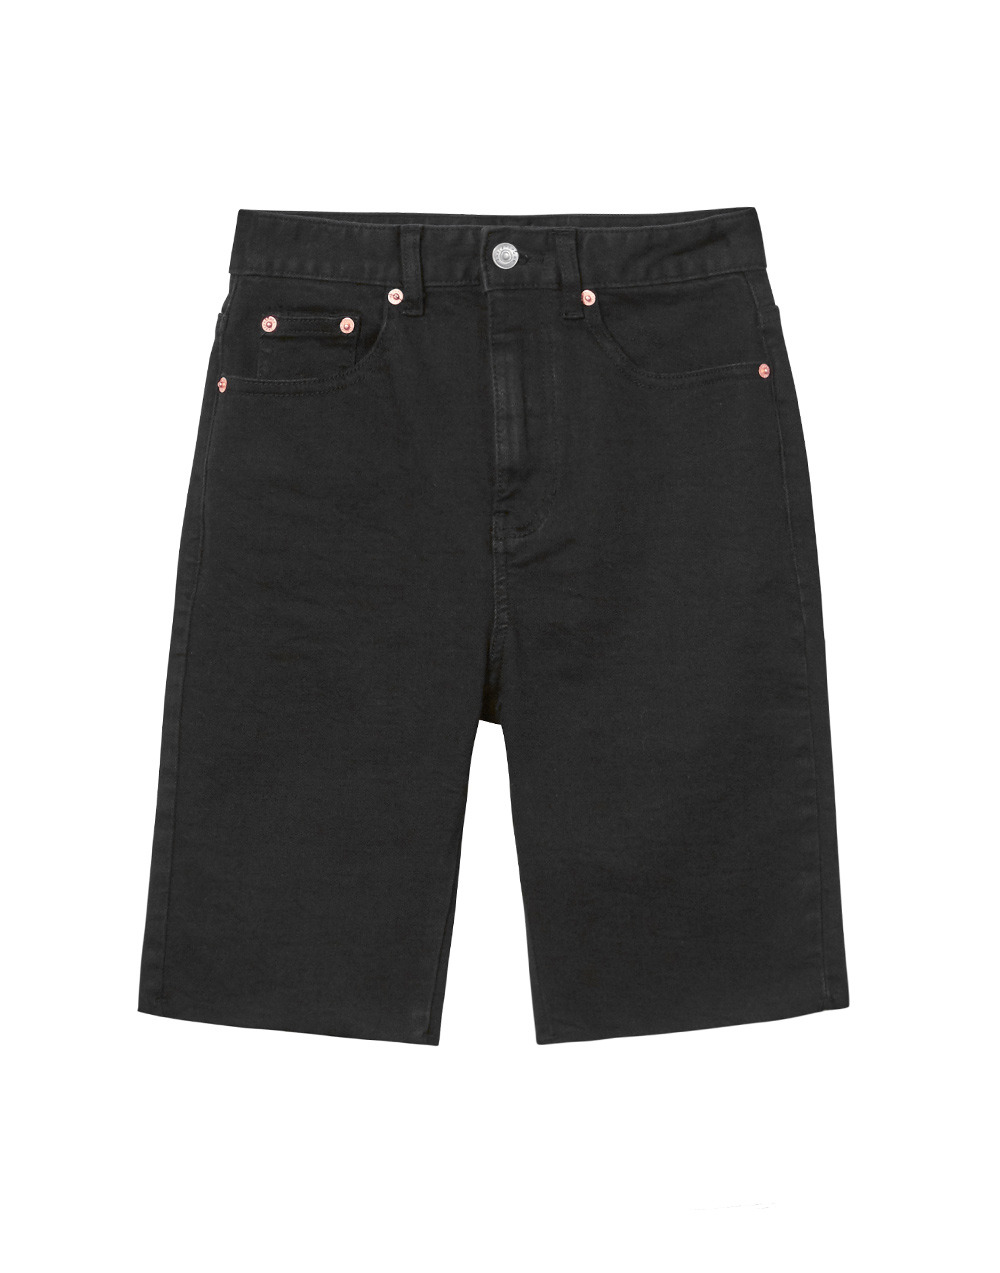 Shorts 02 - Black